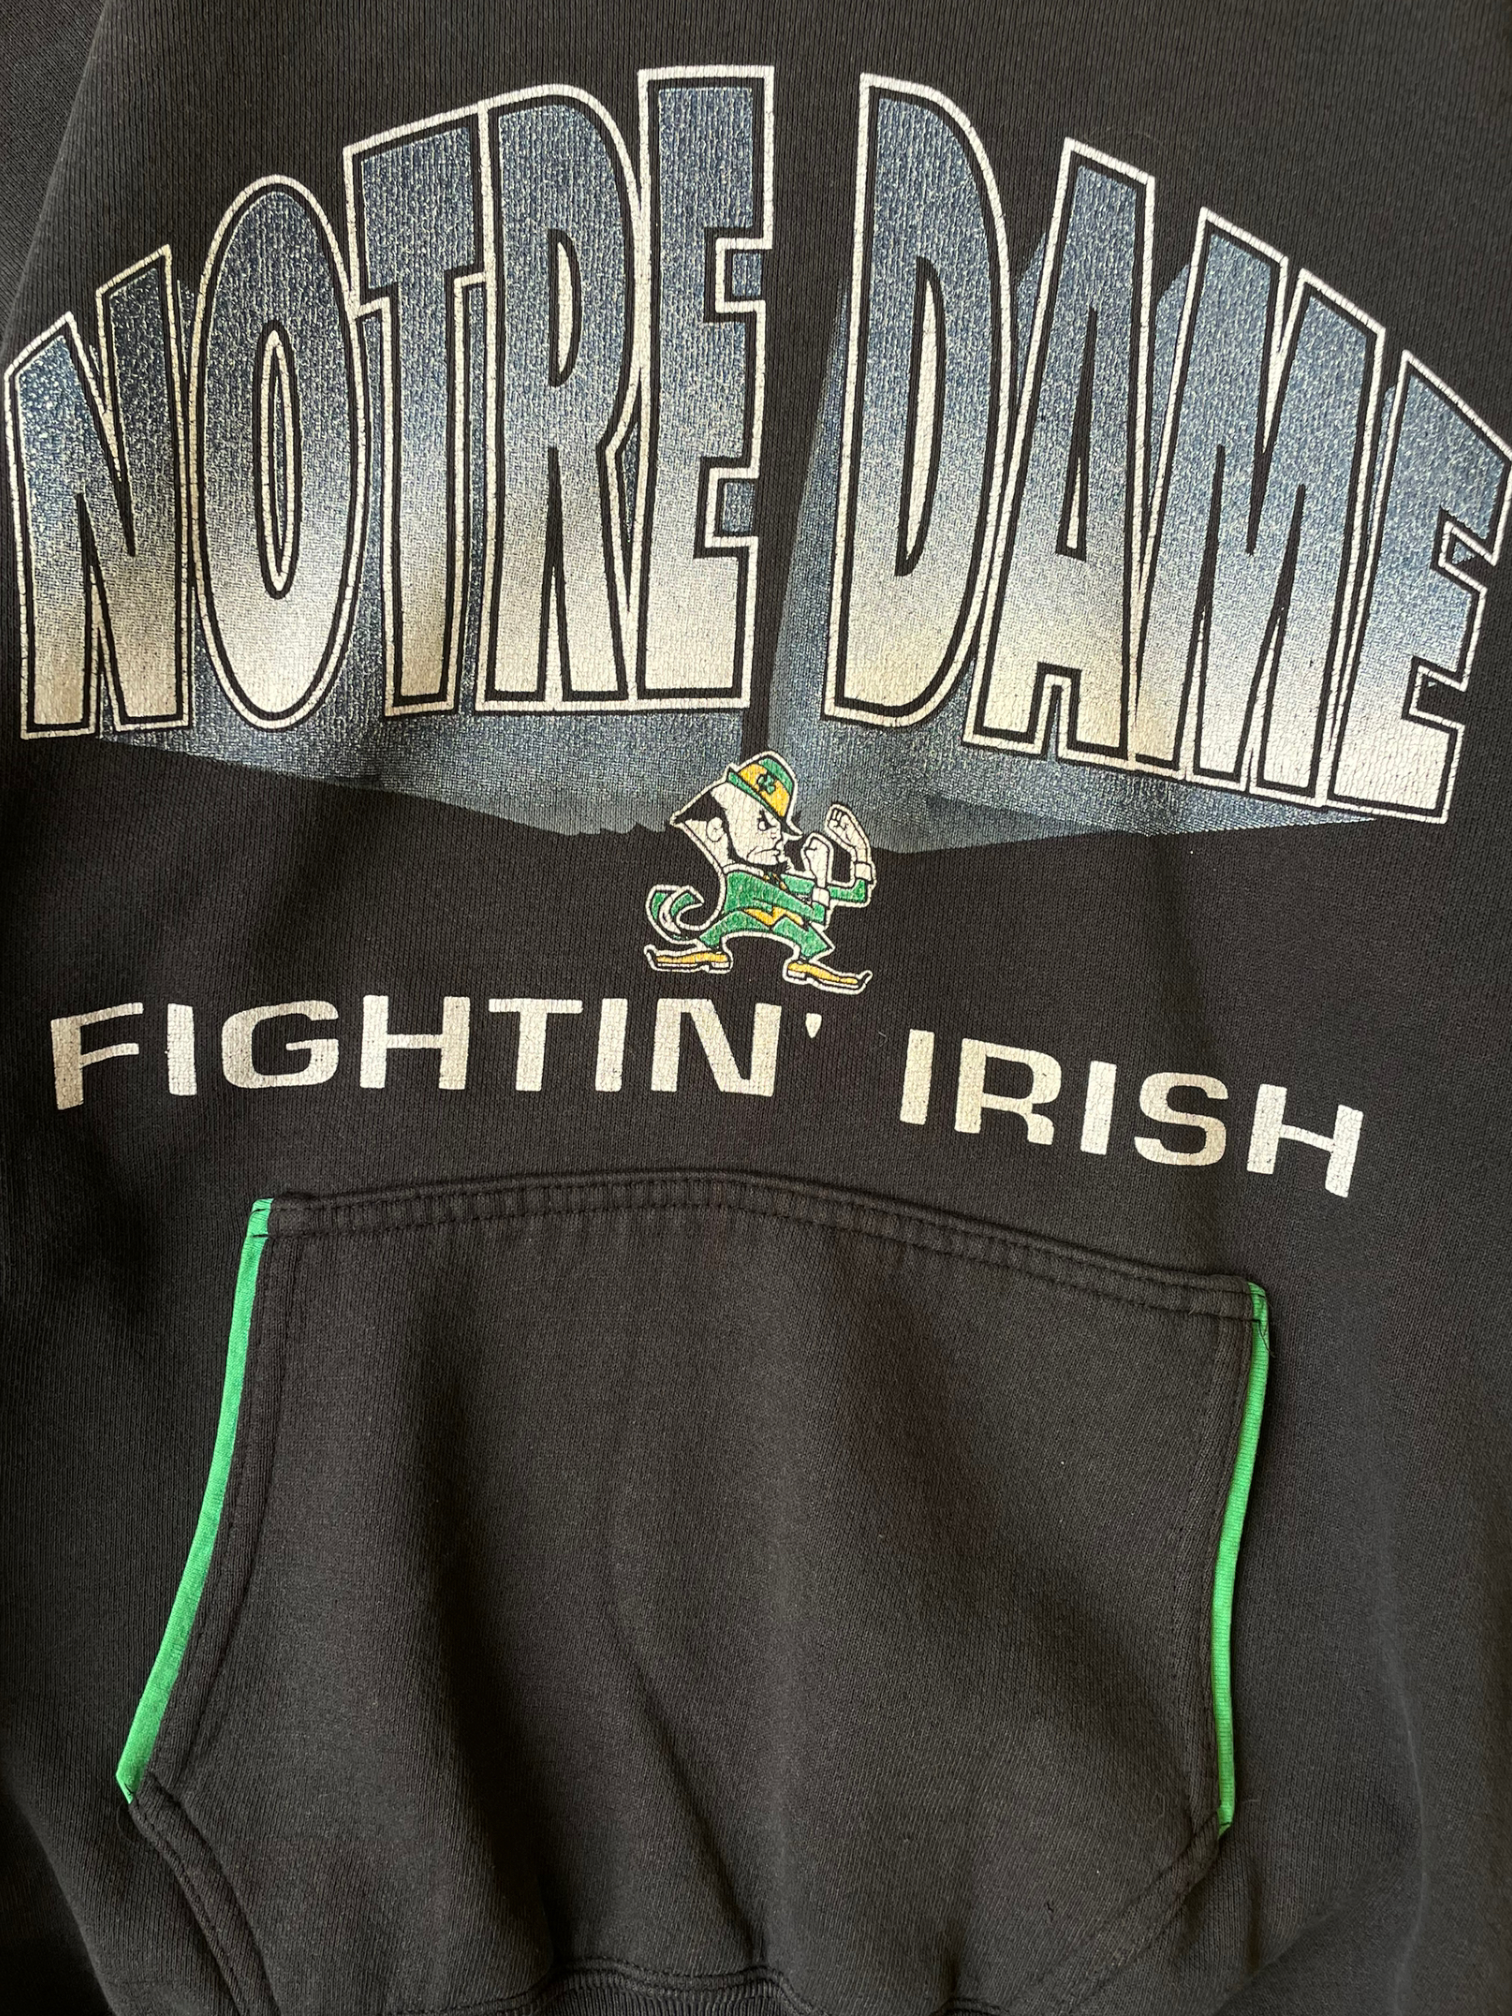 90s University of Notre Dame Sweatshirt - Medium